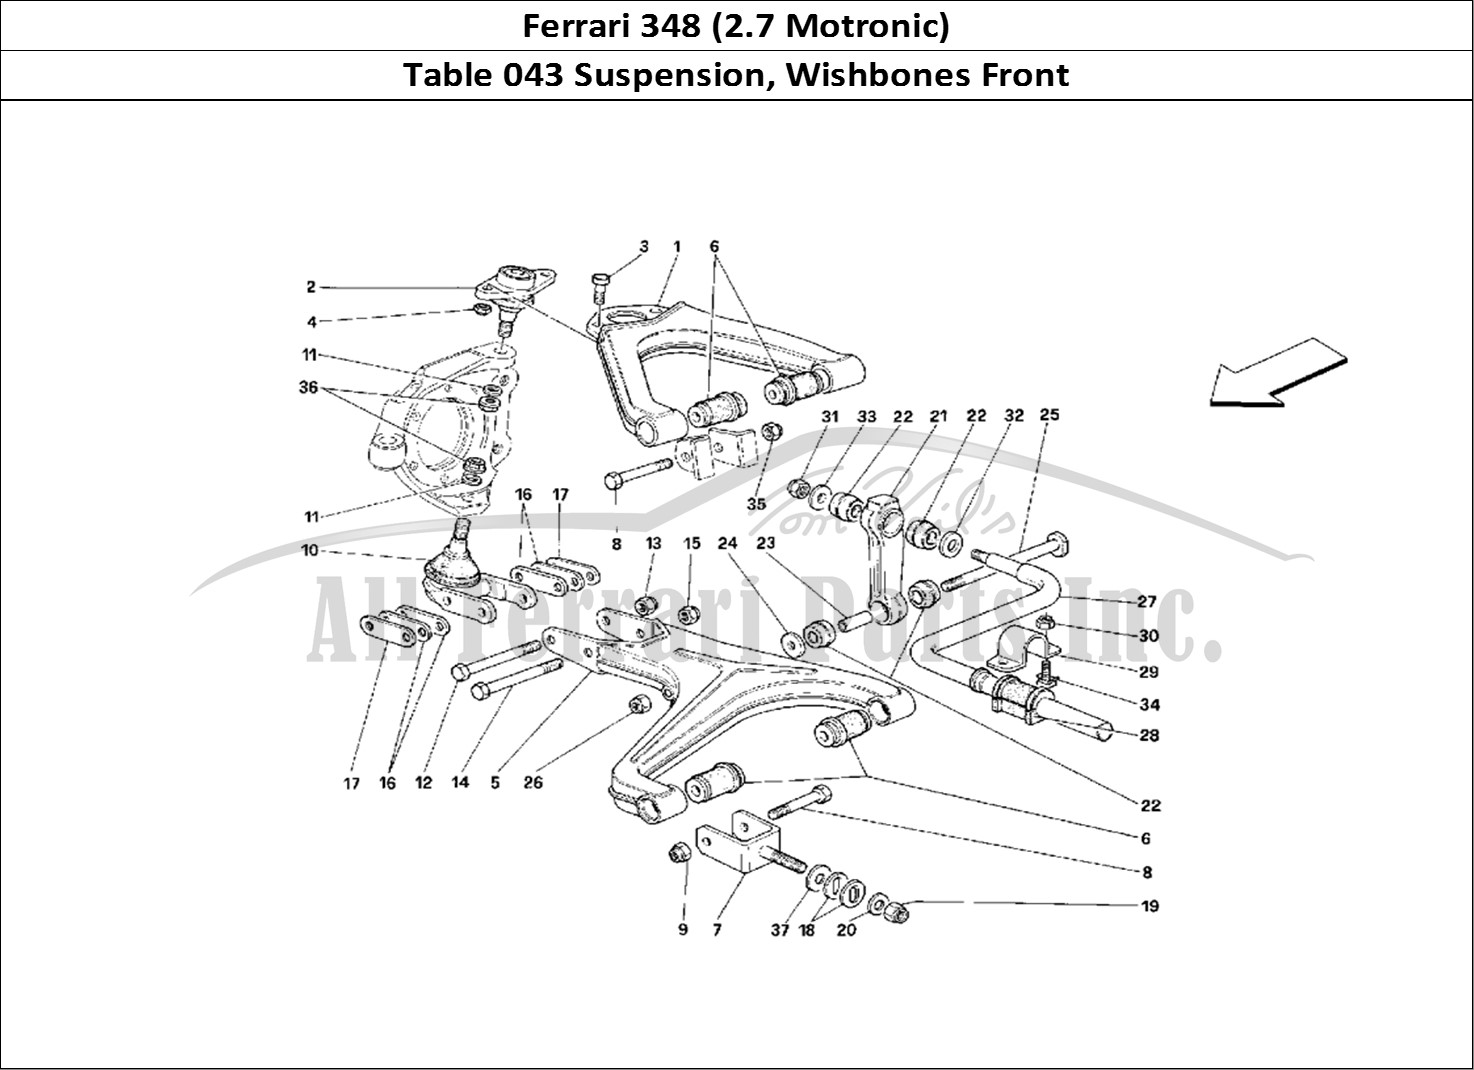 Ferrari Parts Ferrari 348 (2.7 Motronic) Page 043 Front Suspension - Wishbo